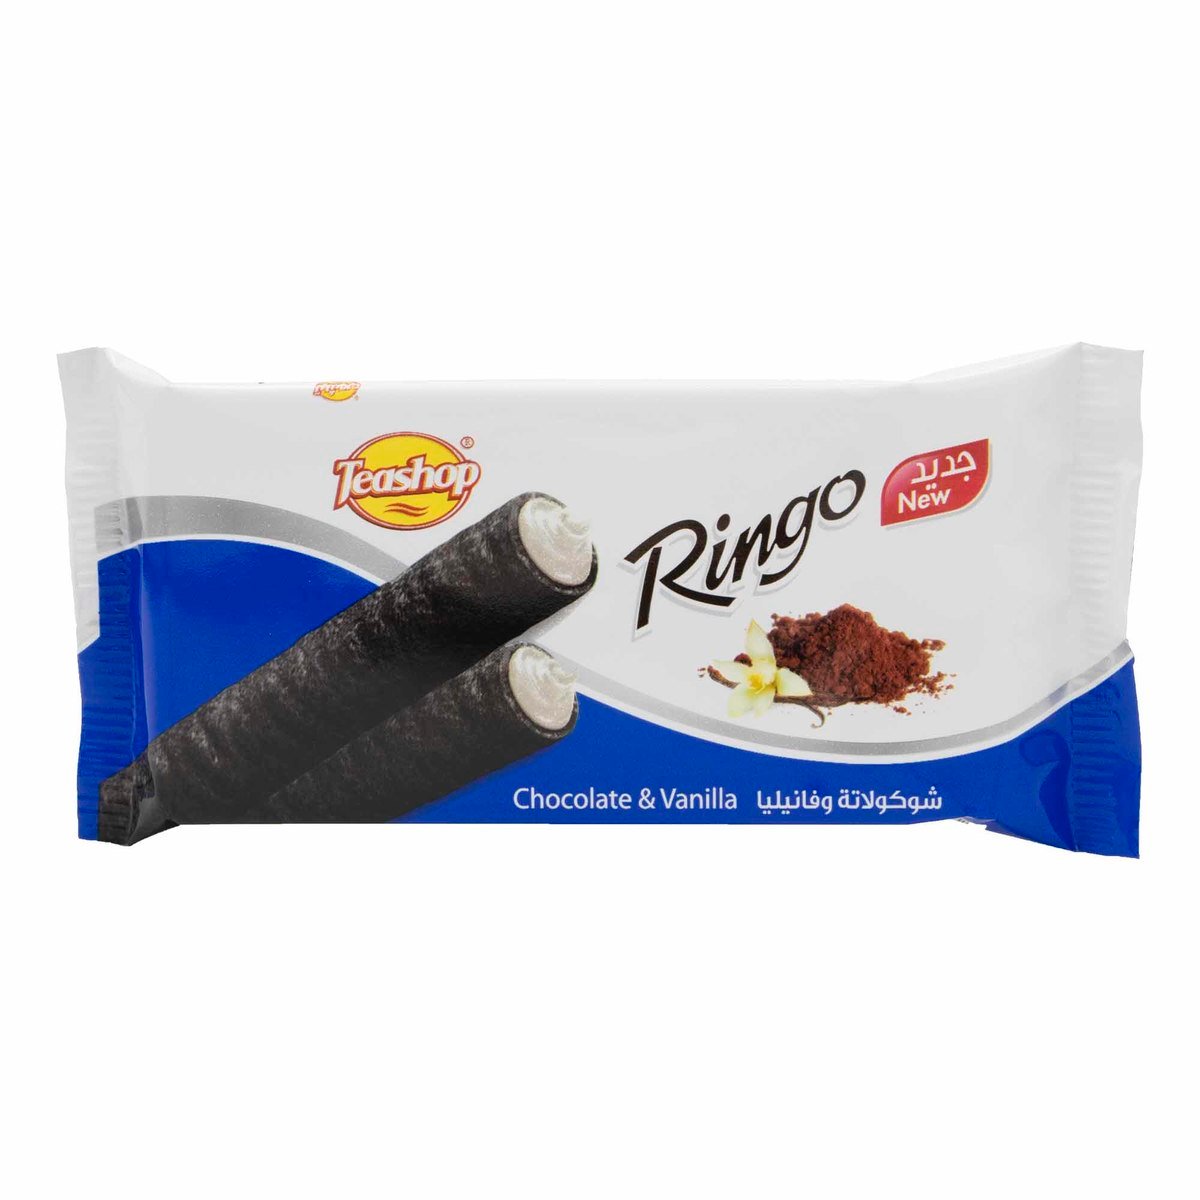 TeaShop Ringo Chocolate & Vanilla Wafer Roll 16g